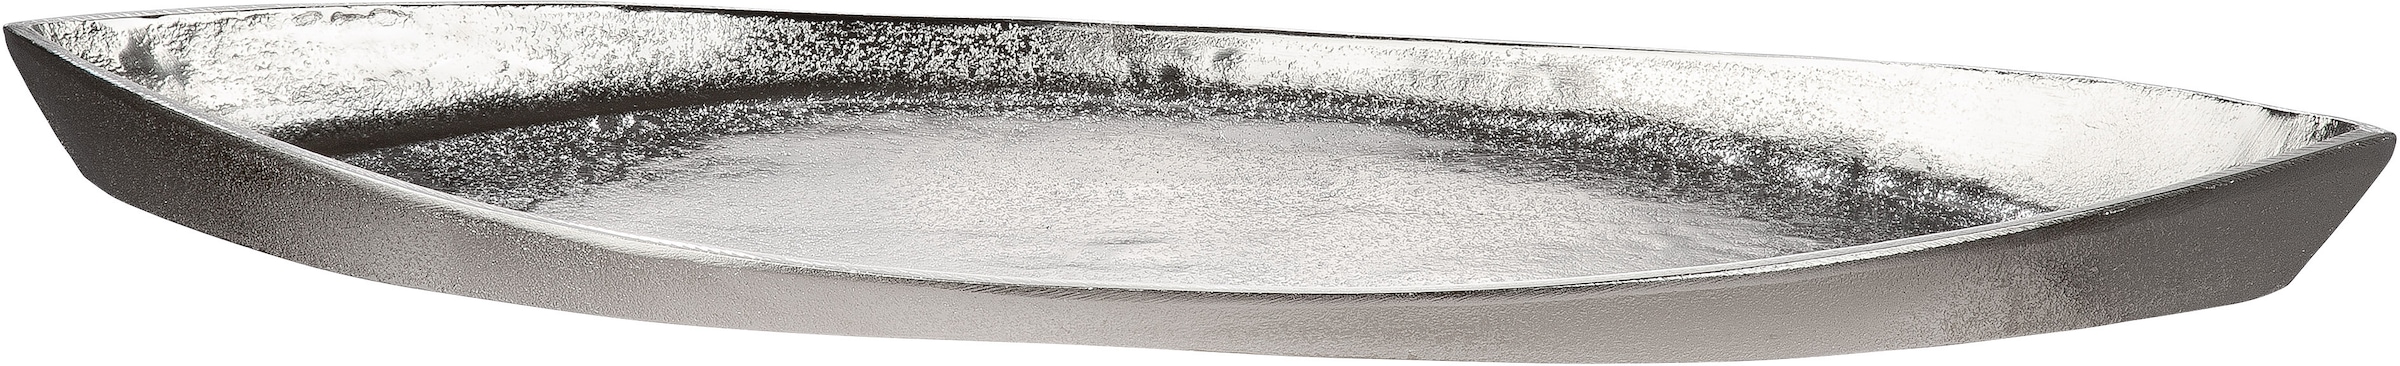 Schale »Boat«, 1 tlg., aus Alumimium, Antik-Finish, silberfarbene Struktur, ideal zum...